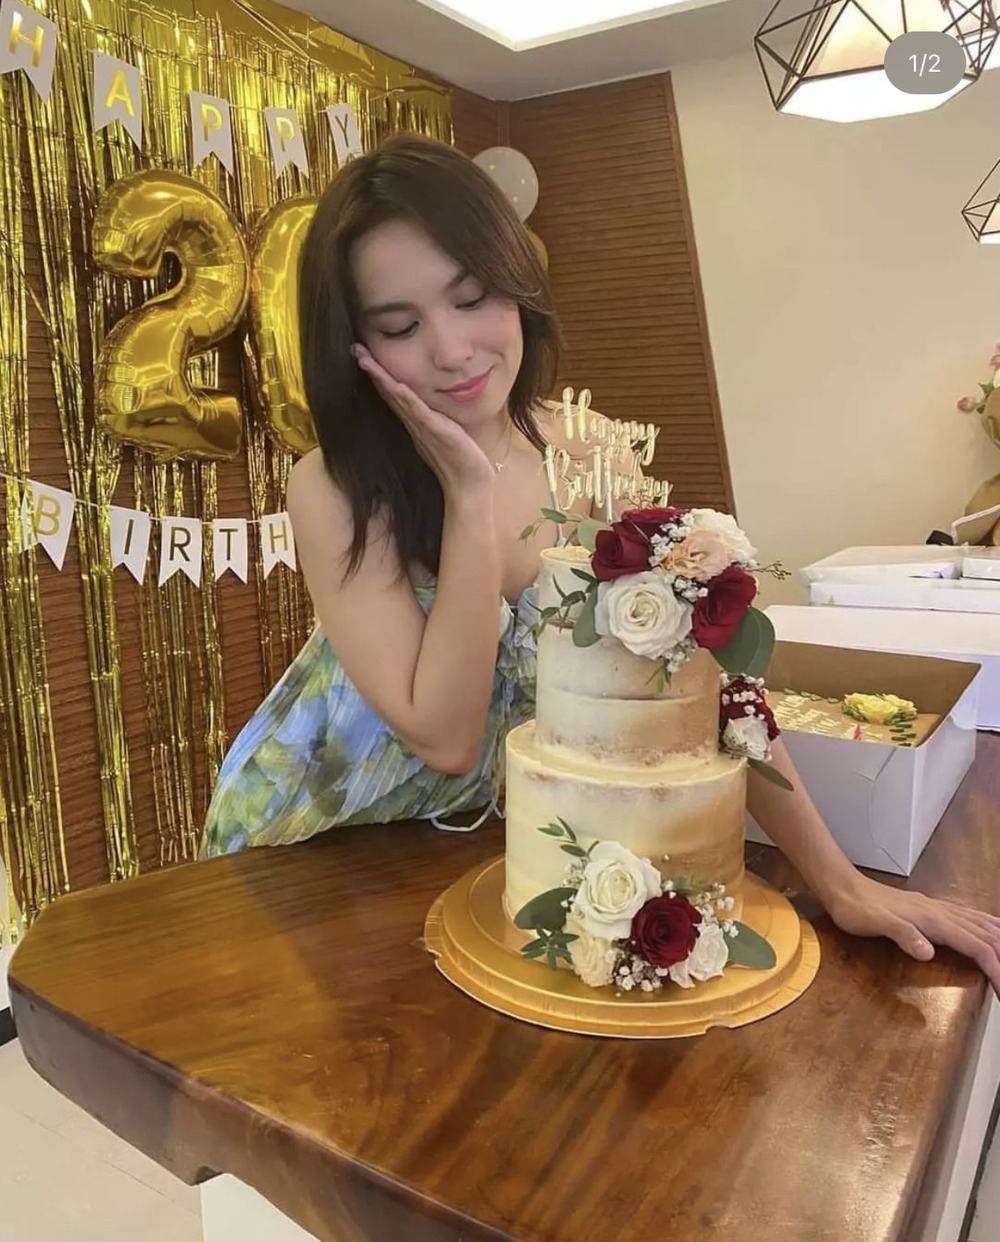 Kyline Alcantara strikes a pose beside her birthday cake.